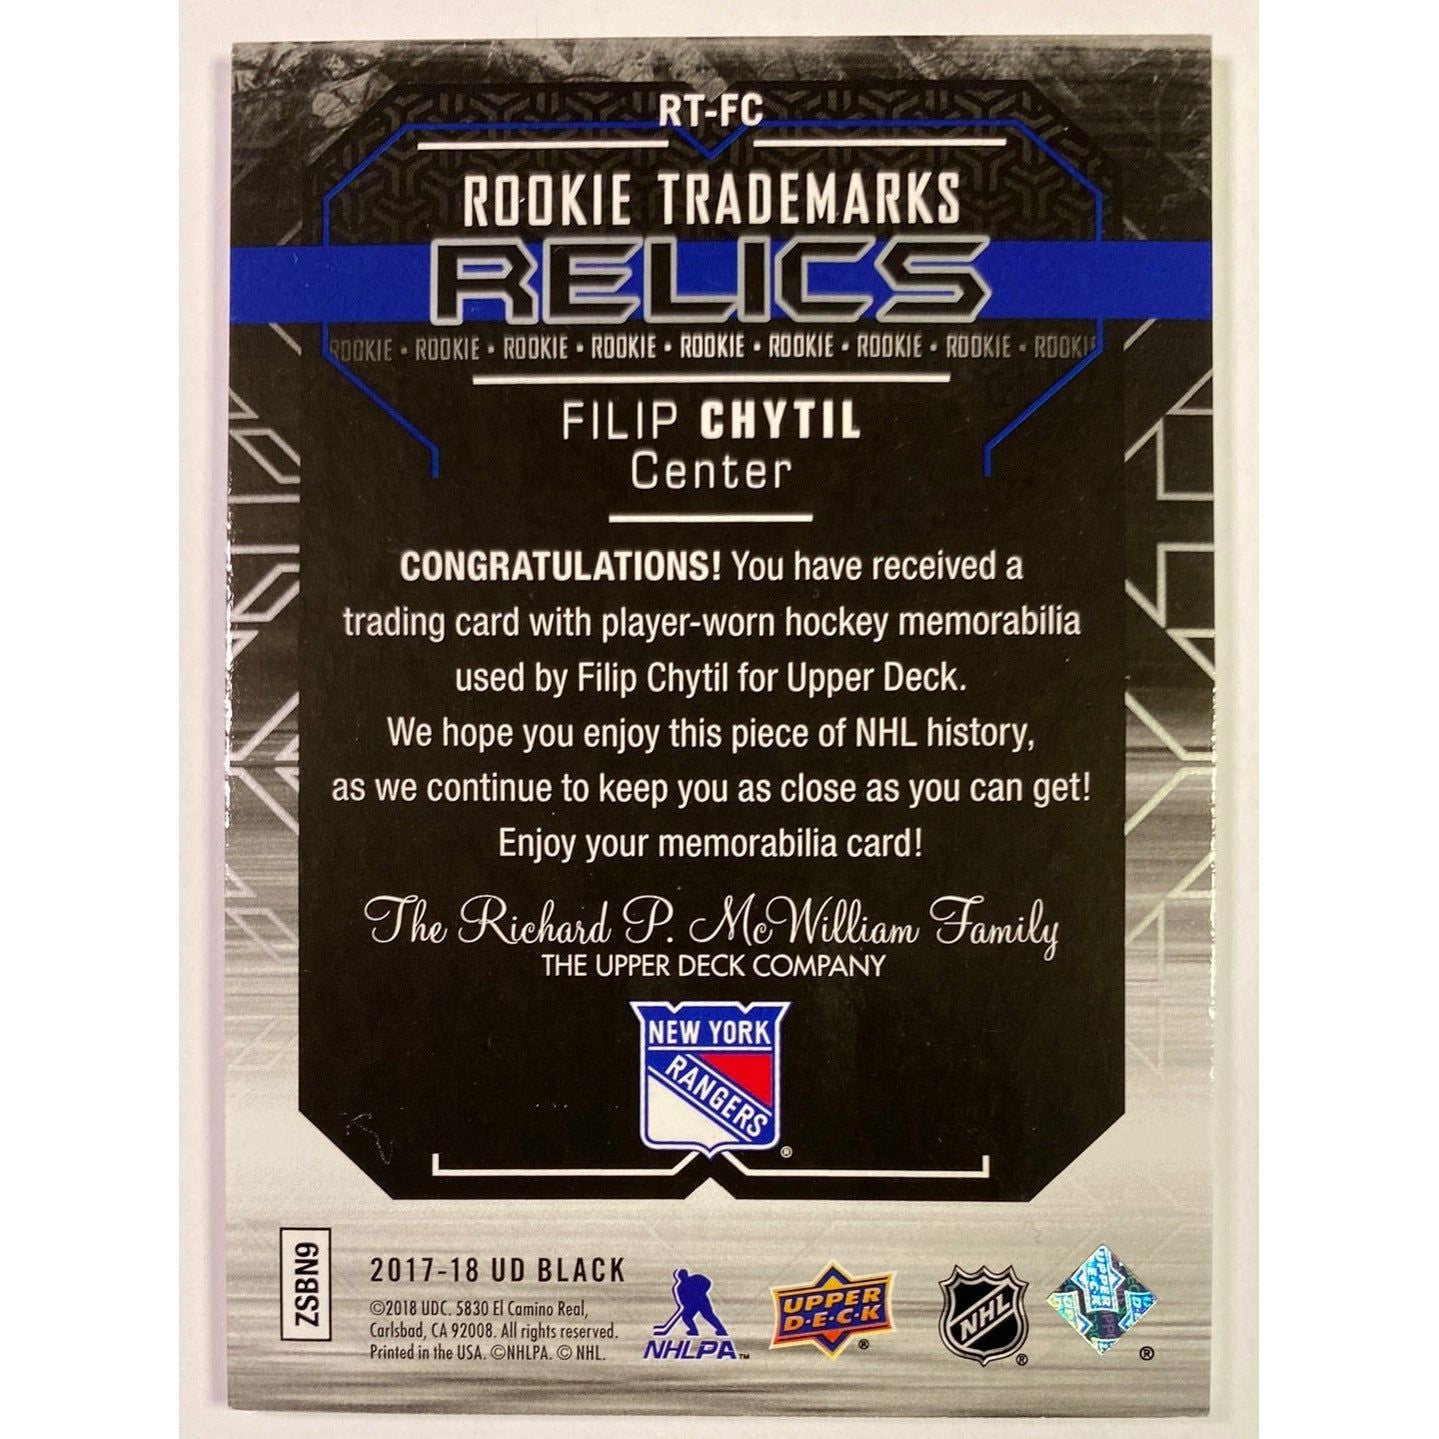  2017-18 UD Black Filip Chytil Rookie Trademarks Relics /299  Local Legends Cards & Collectibles